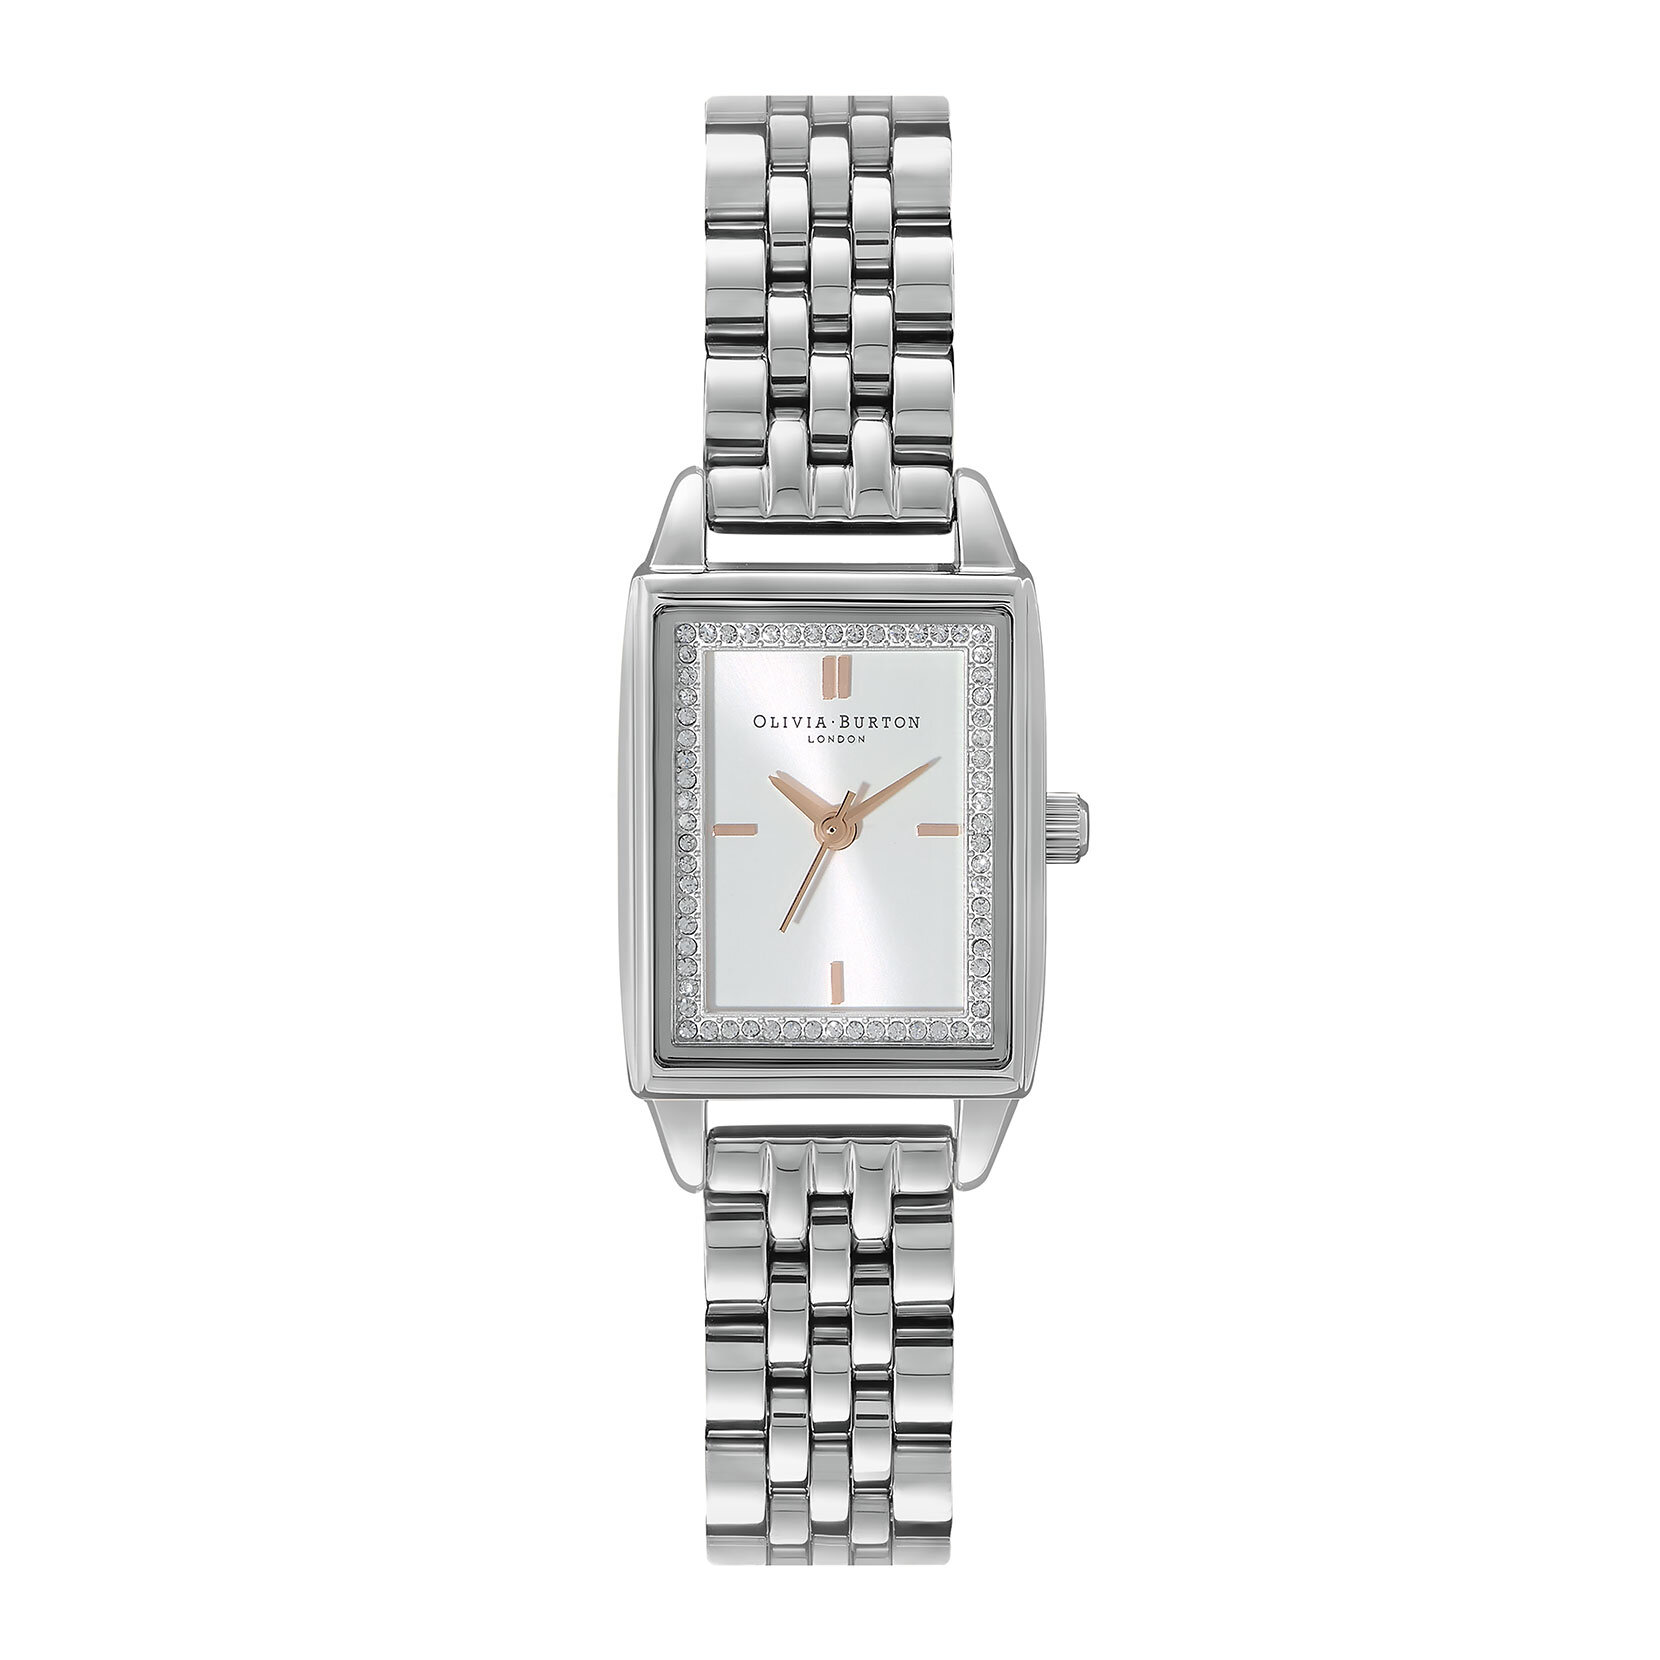 21mm Rectangle White & Silver Bracelet Watch